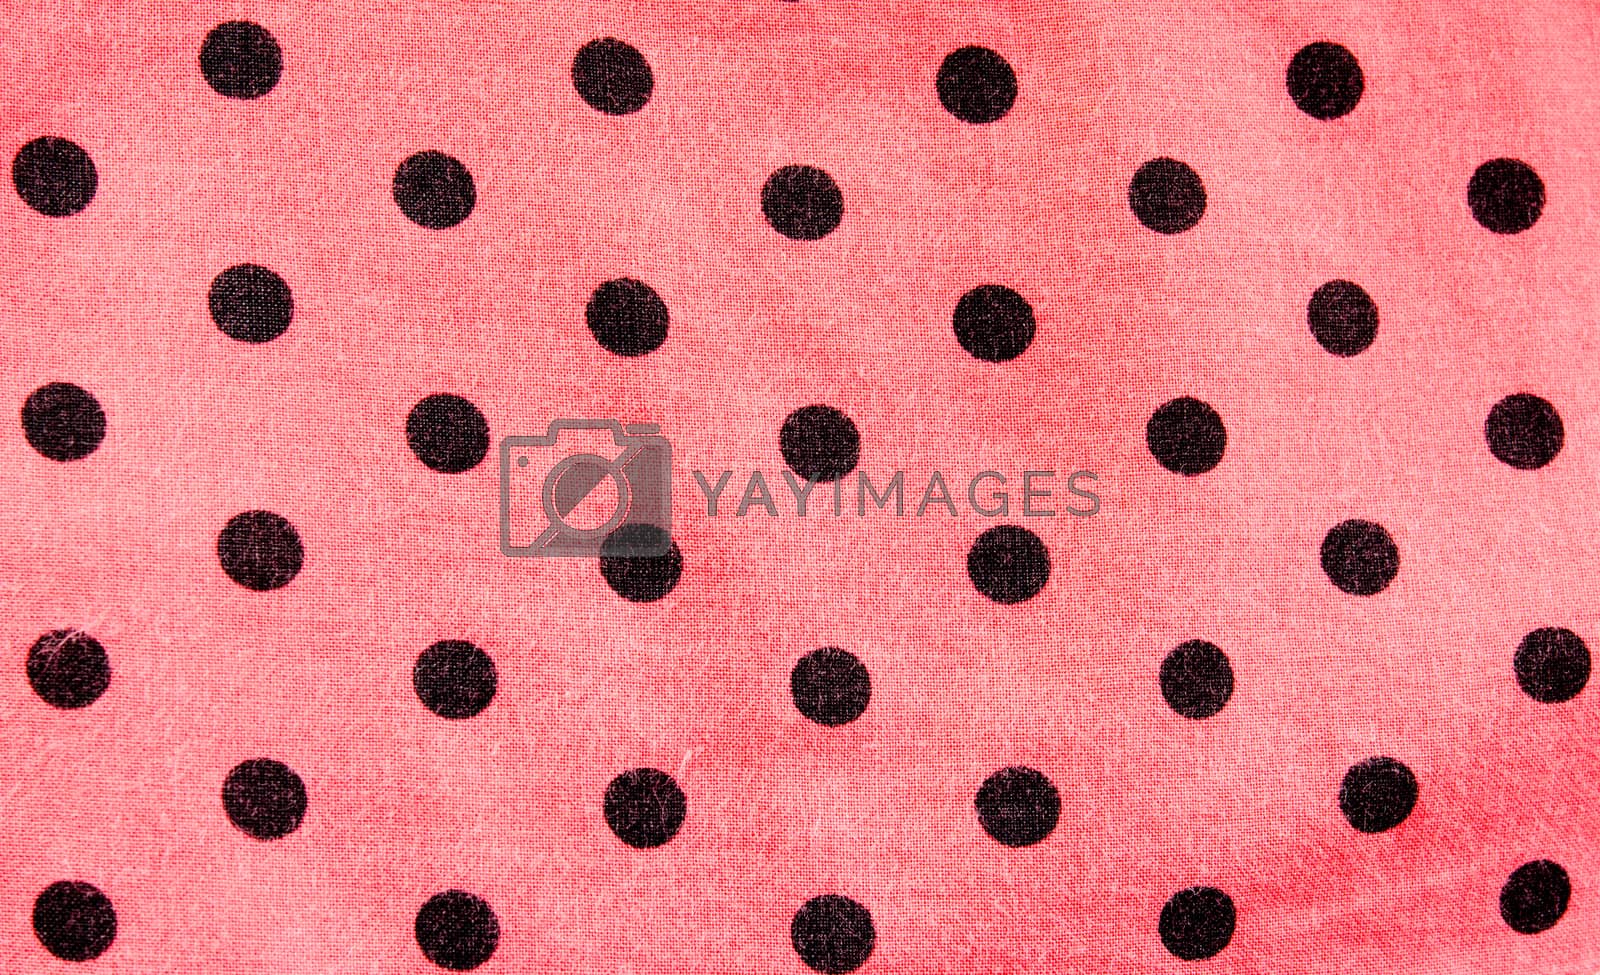 Royalty free image of Polka Dots by aoo3771